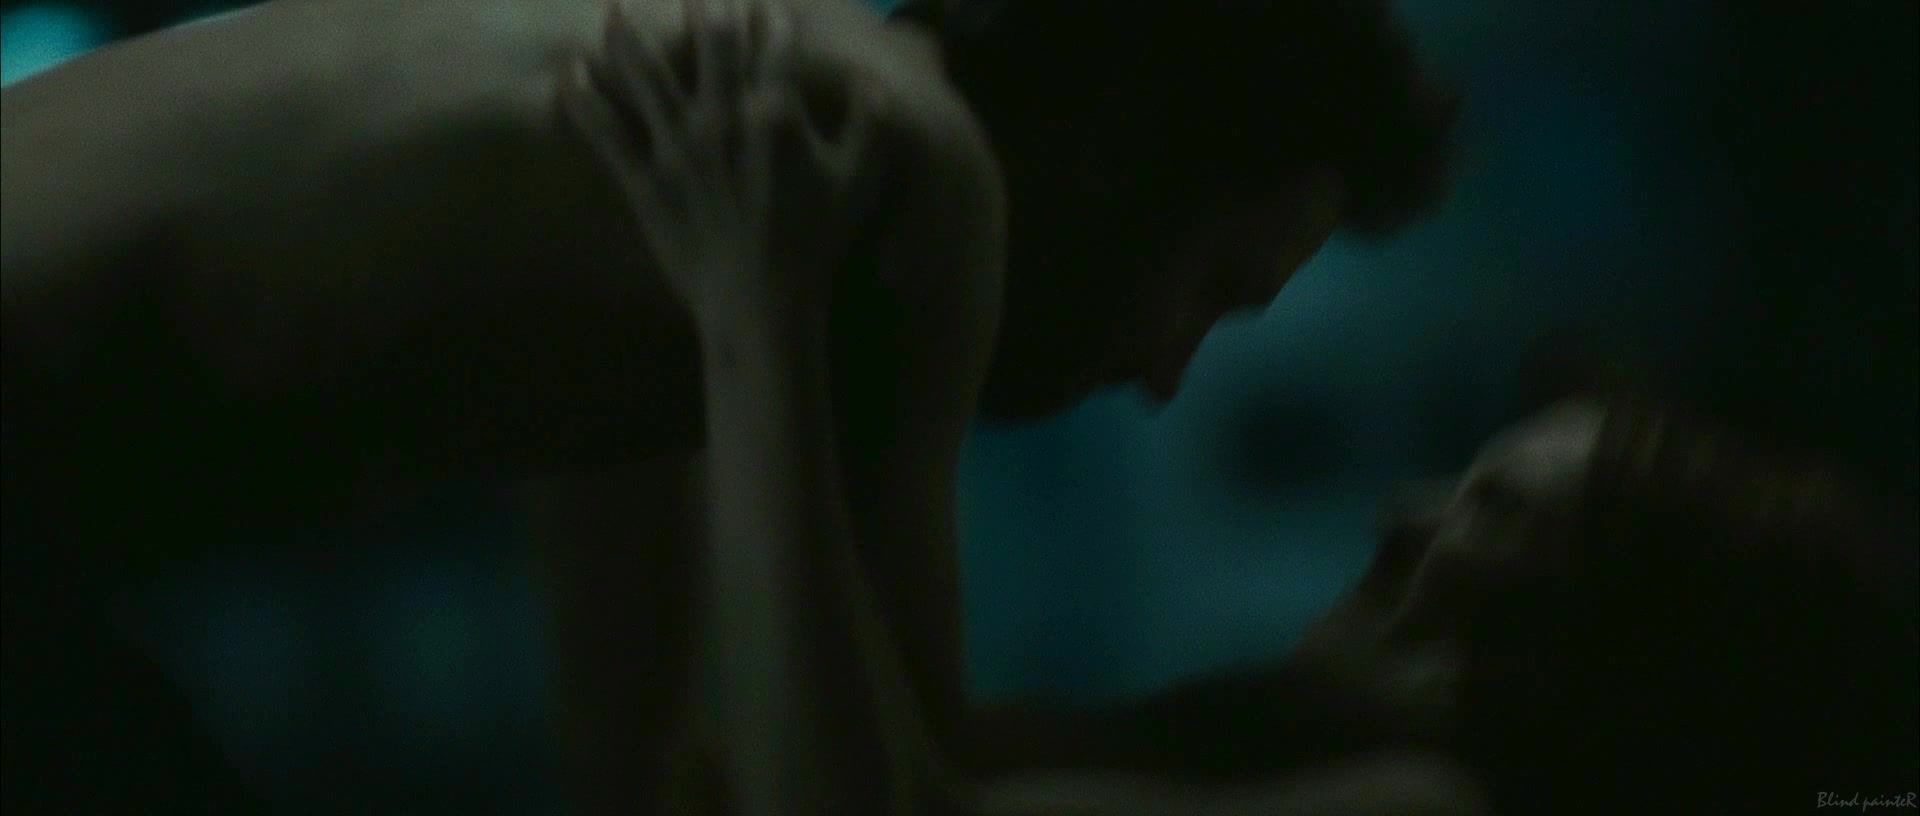 Cumming Sex video Lauren Lee Smith nude - Pathology (2008) Leaked